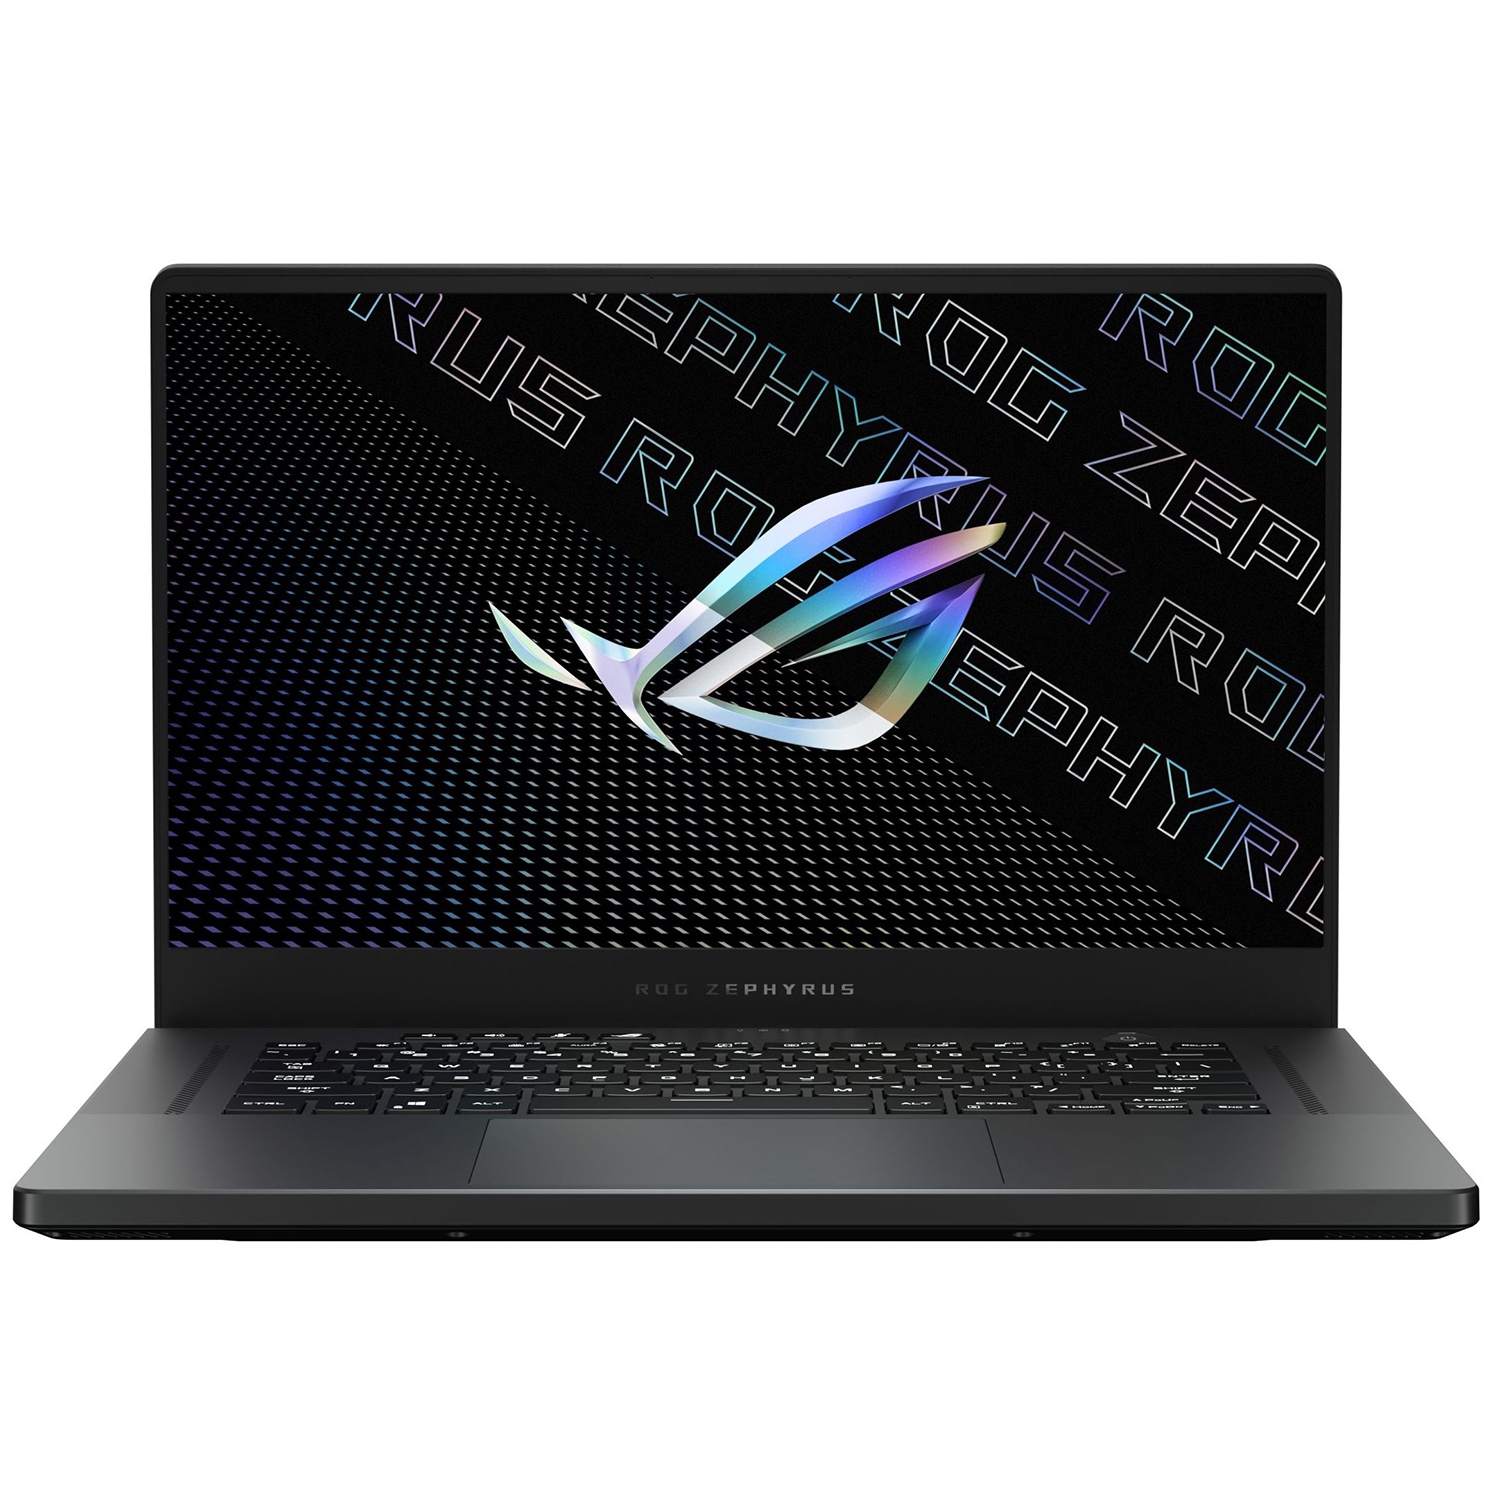 Custom ASUS ROG Zephyrus G15 Laptop (AMD Ryzen 9 5900HS, 40GB RAM, 1TB PCIe SSD, NVIDIA RTX 3060, Win 10 Home)